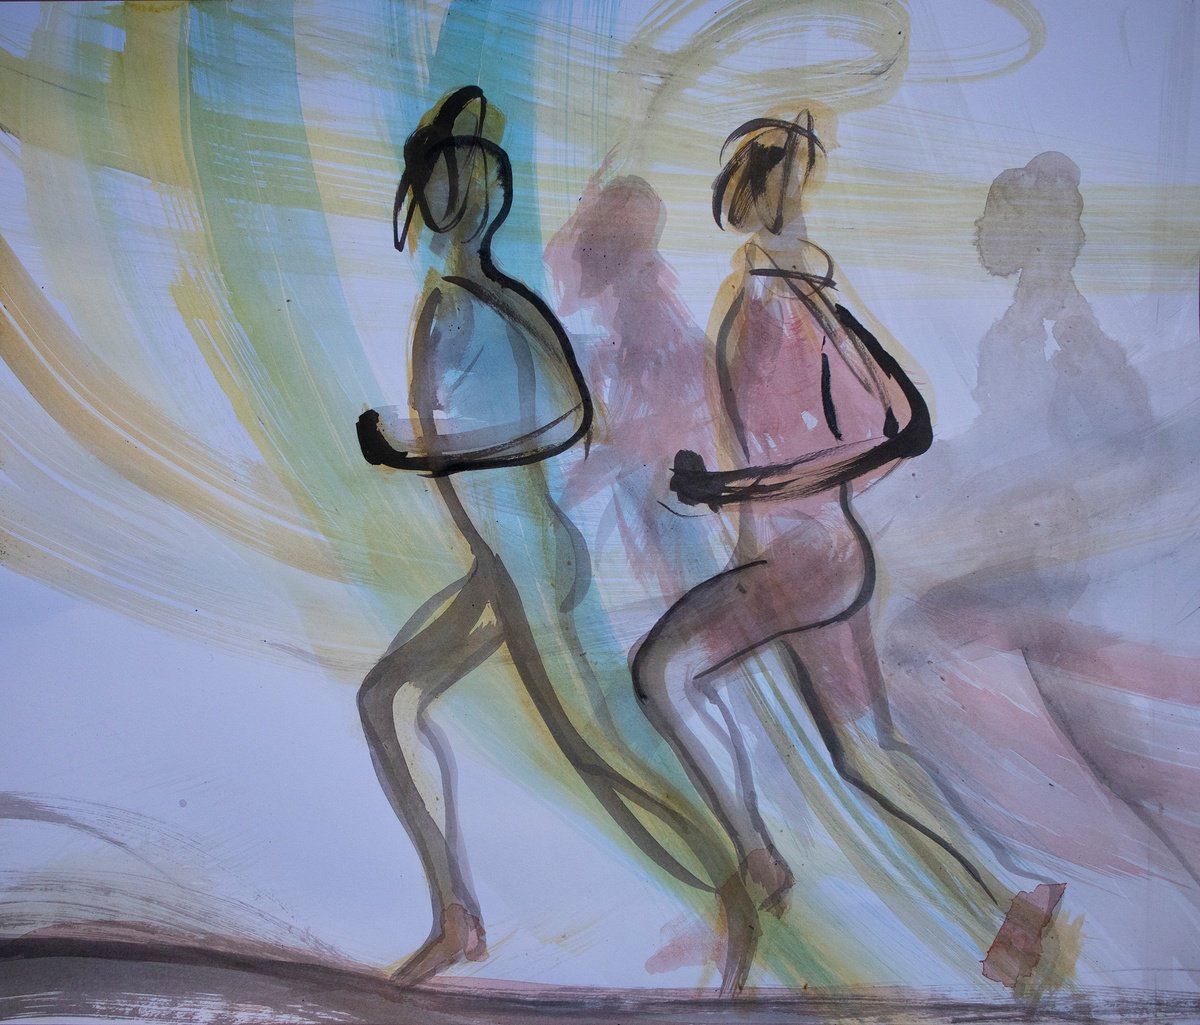 Runners high by Rene Goorman